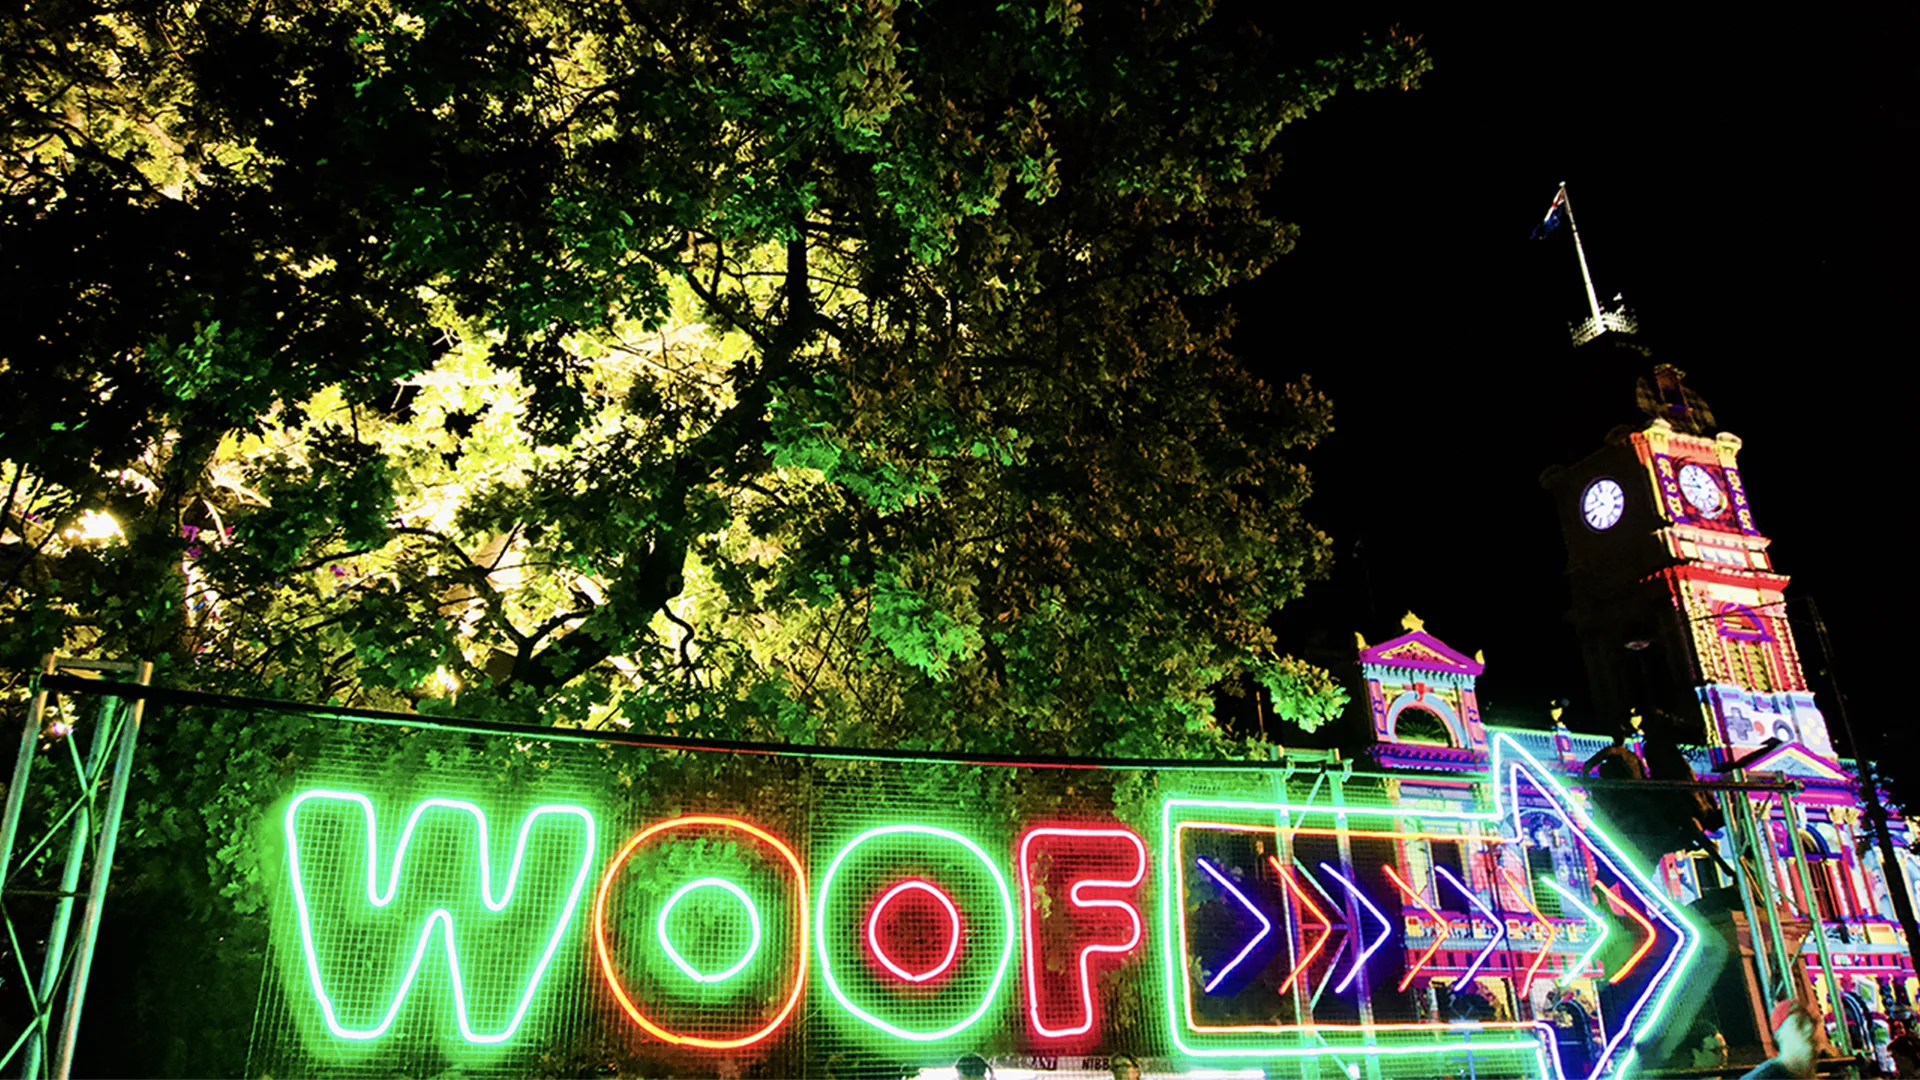 Neon 'woof' sign